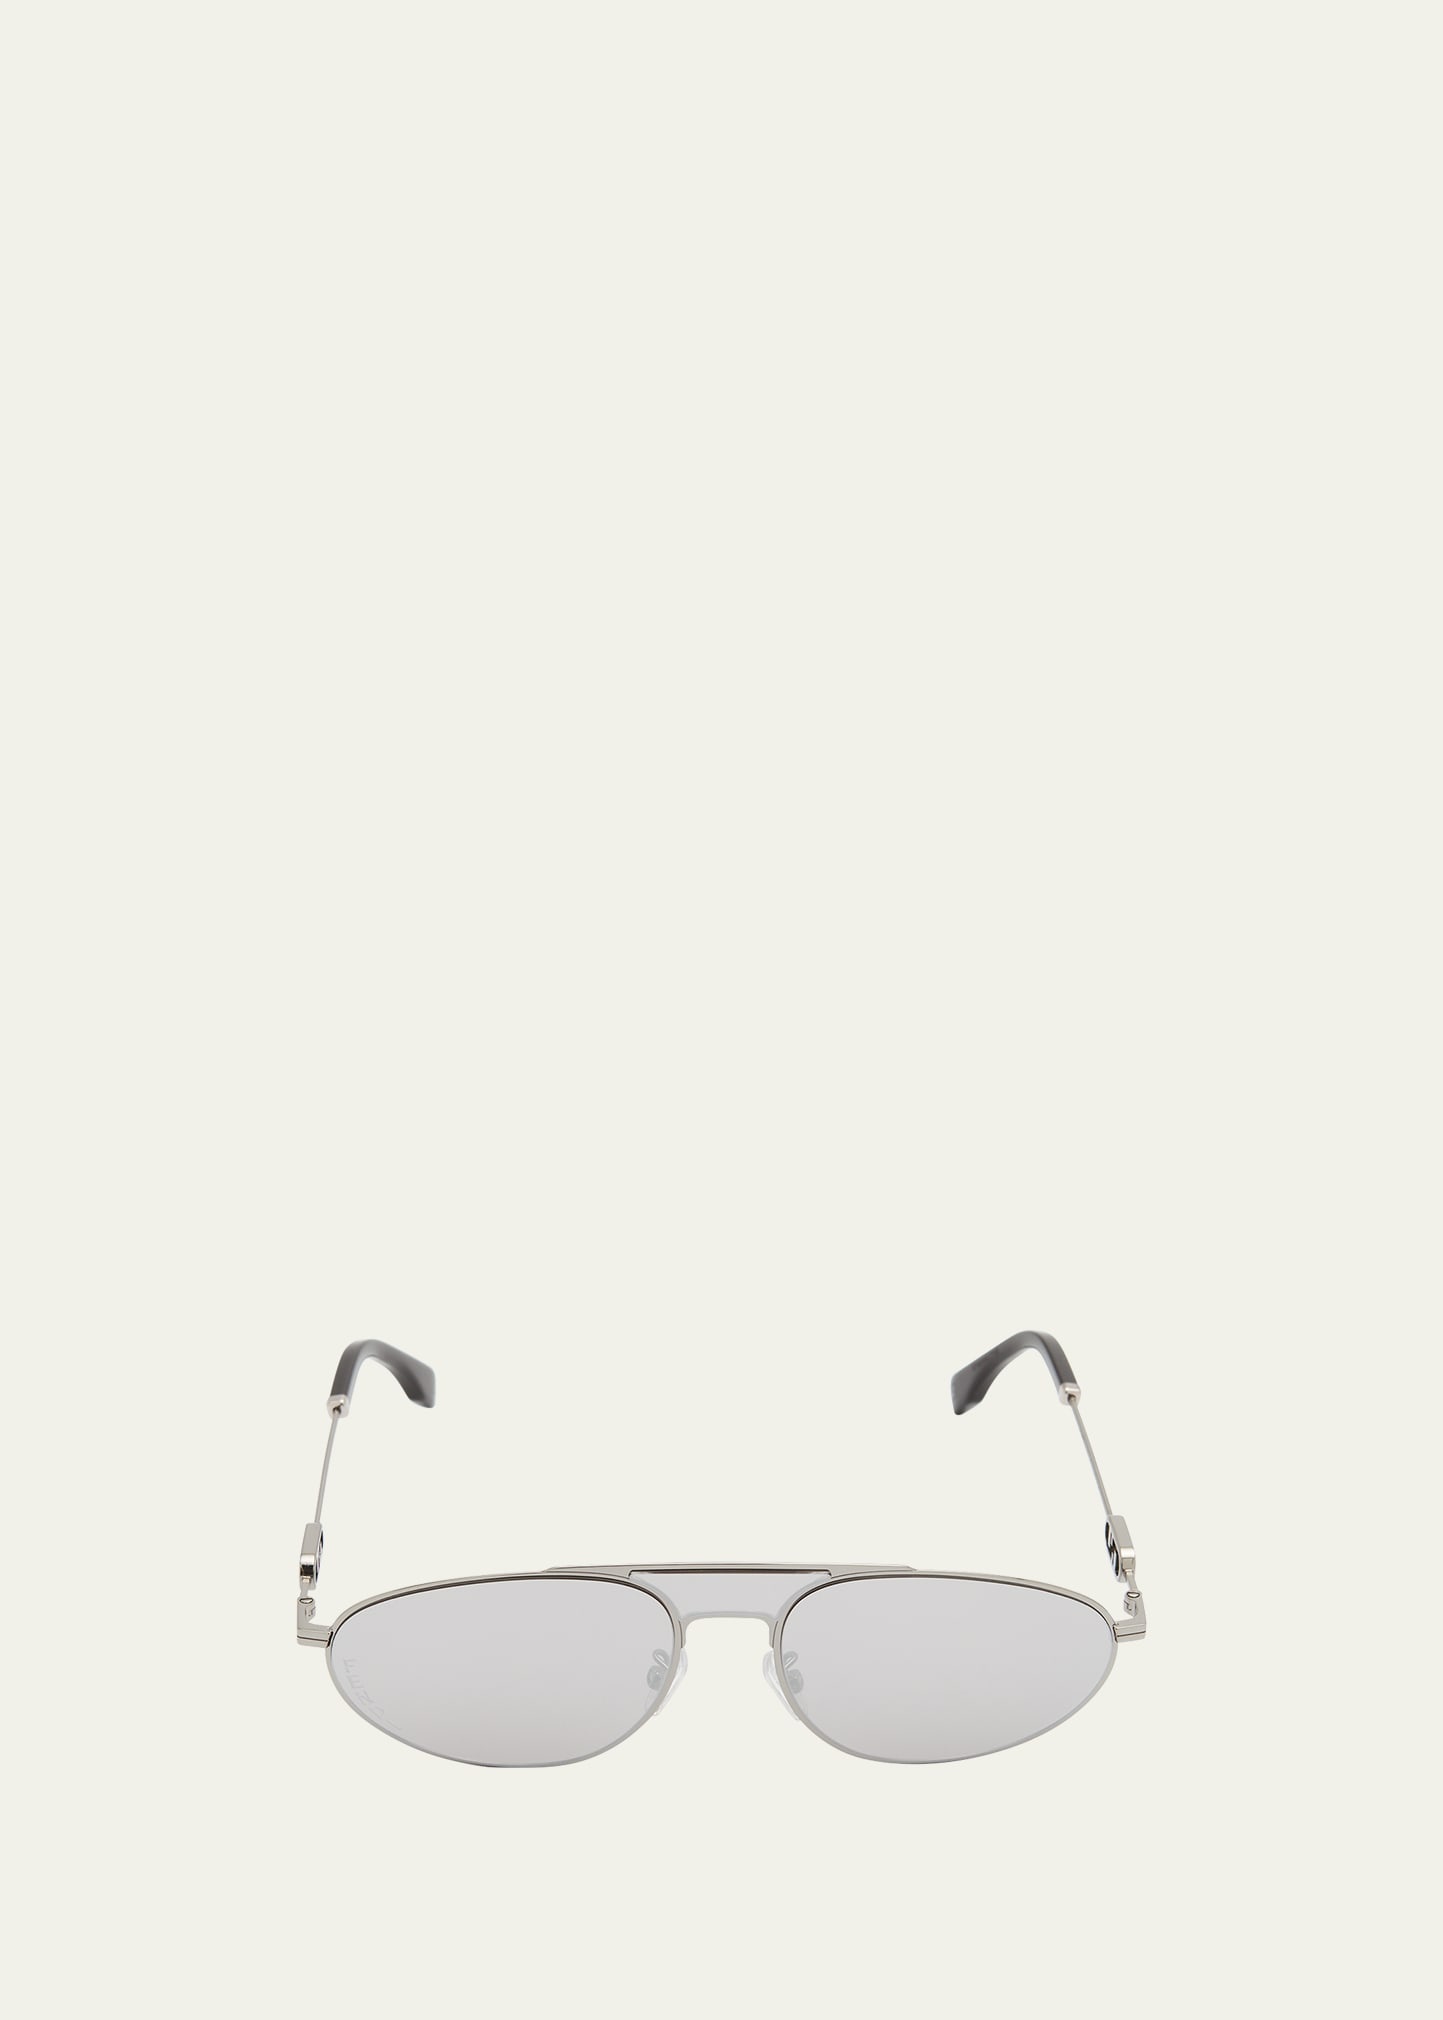 Fendi Men's Gold-Tone Ff-logo Rectangle Sunglasses